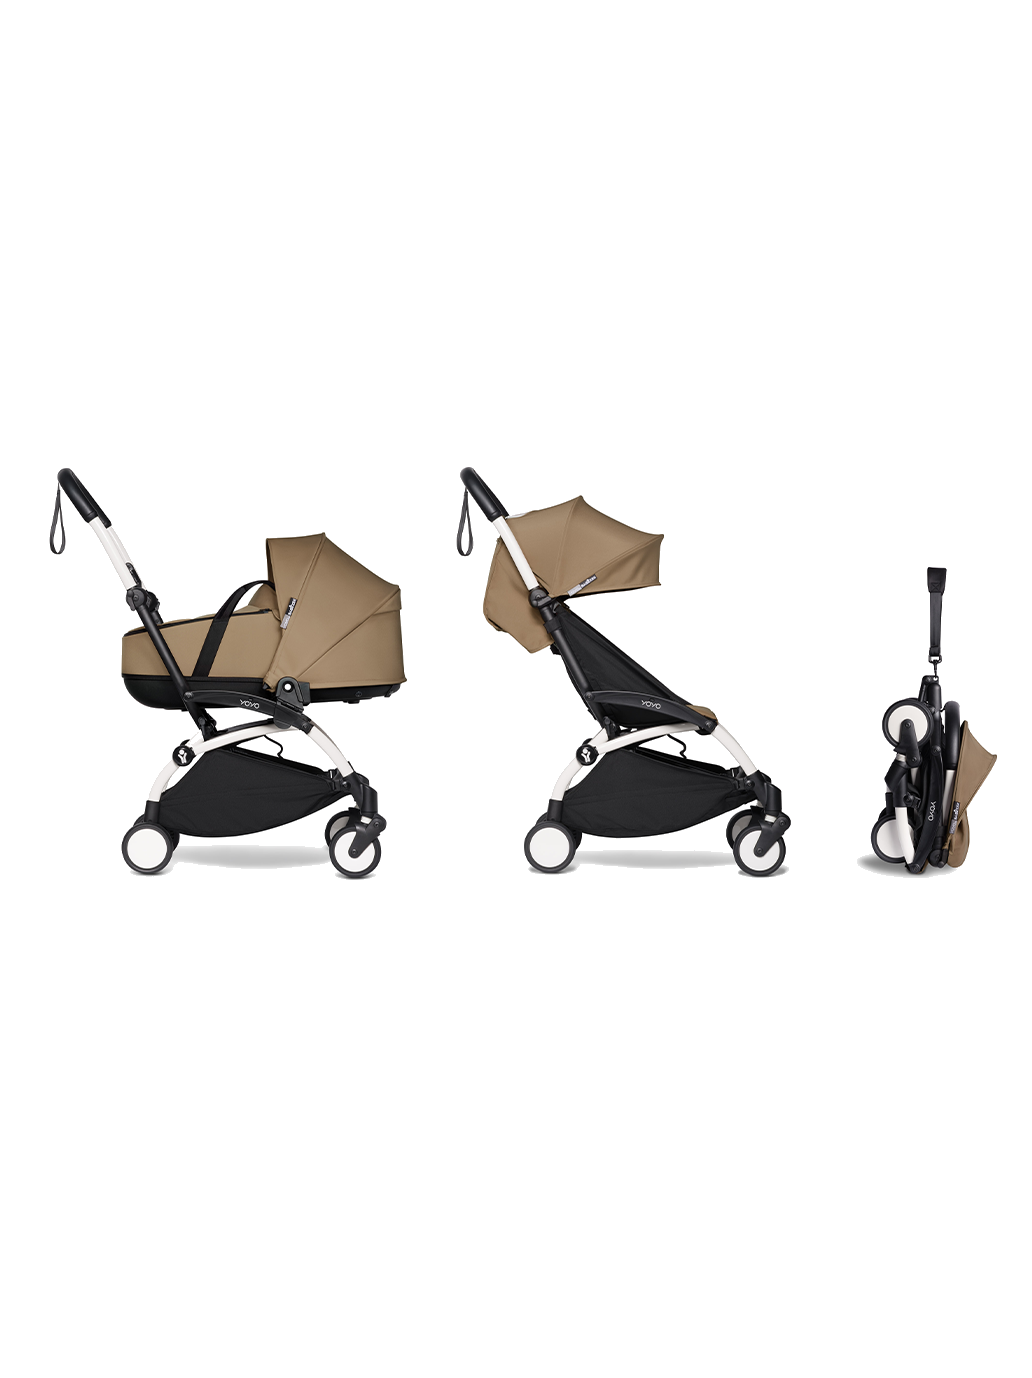 Carrycot for the BABYZEN YOYO stroller 0m+